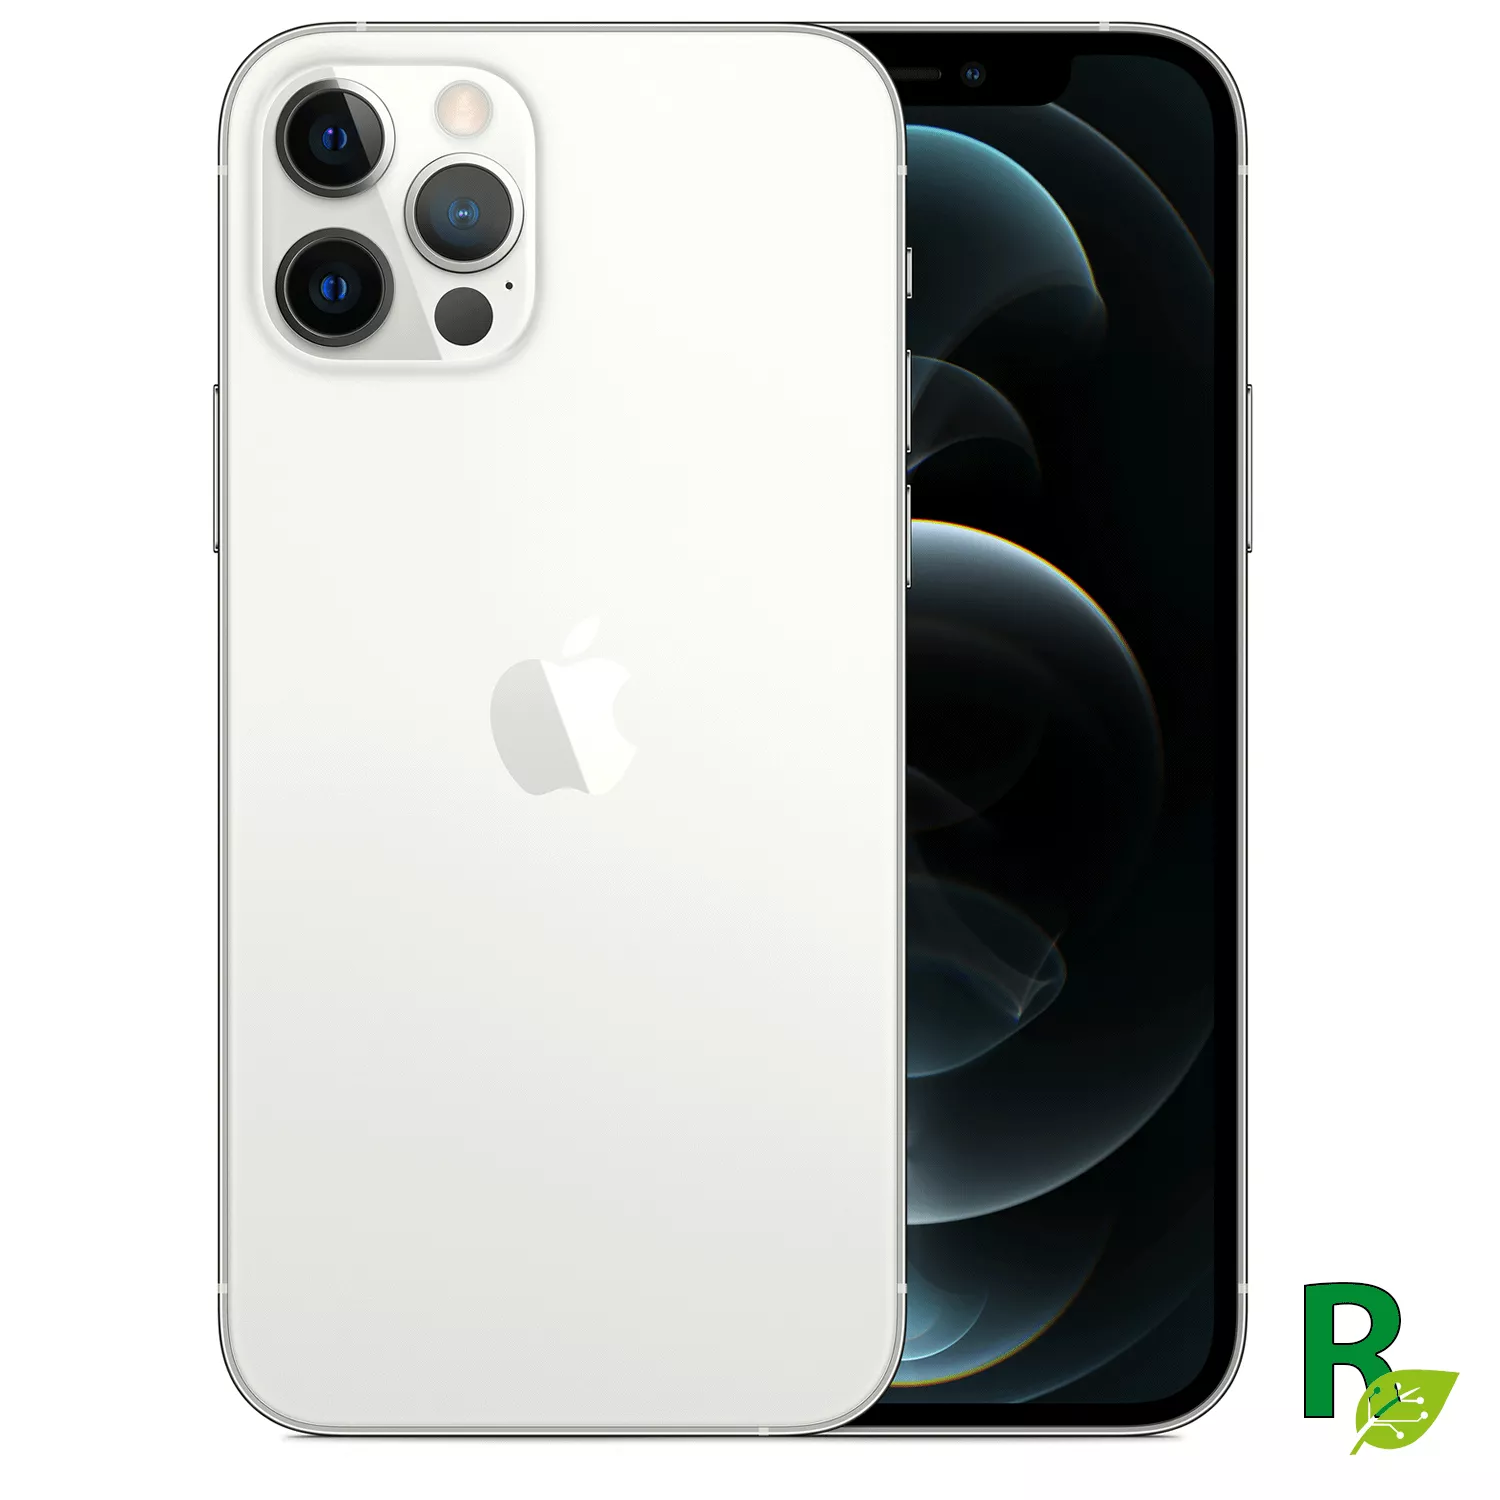 iPhone 12 Pro Max 128 Silver- 12PROMAXSILVER128A- Grado A -Reacondicionado  12PM128IPH5